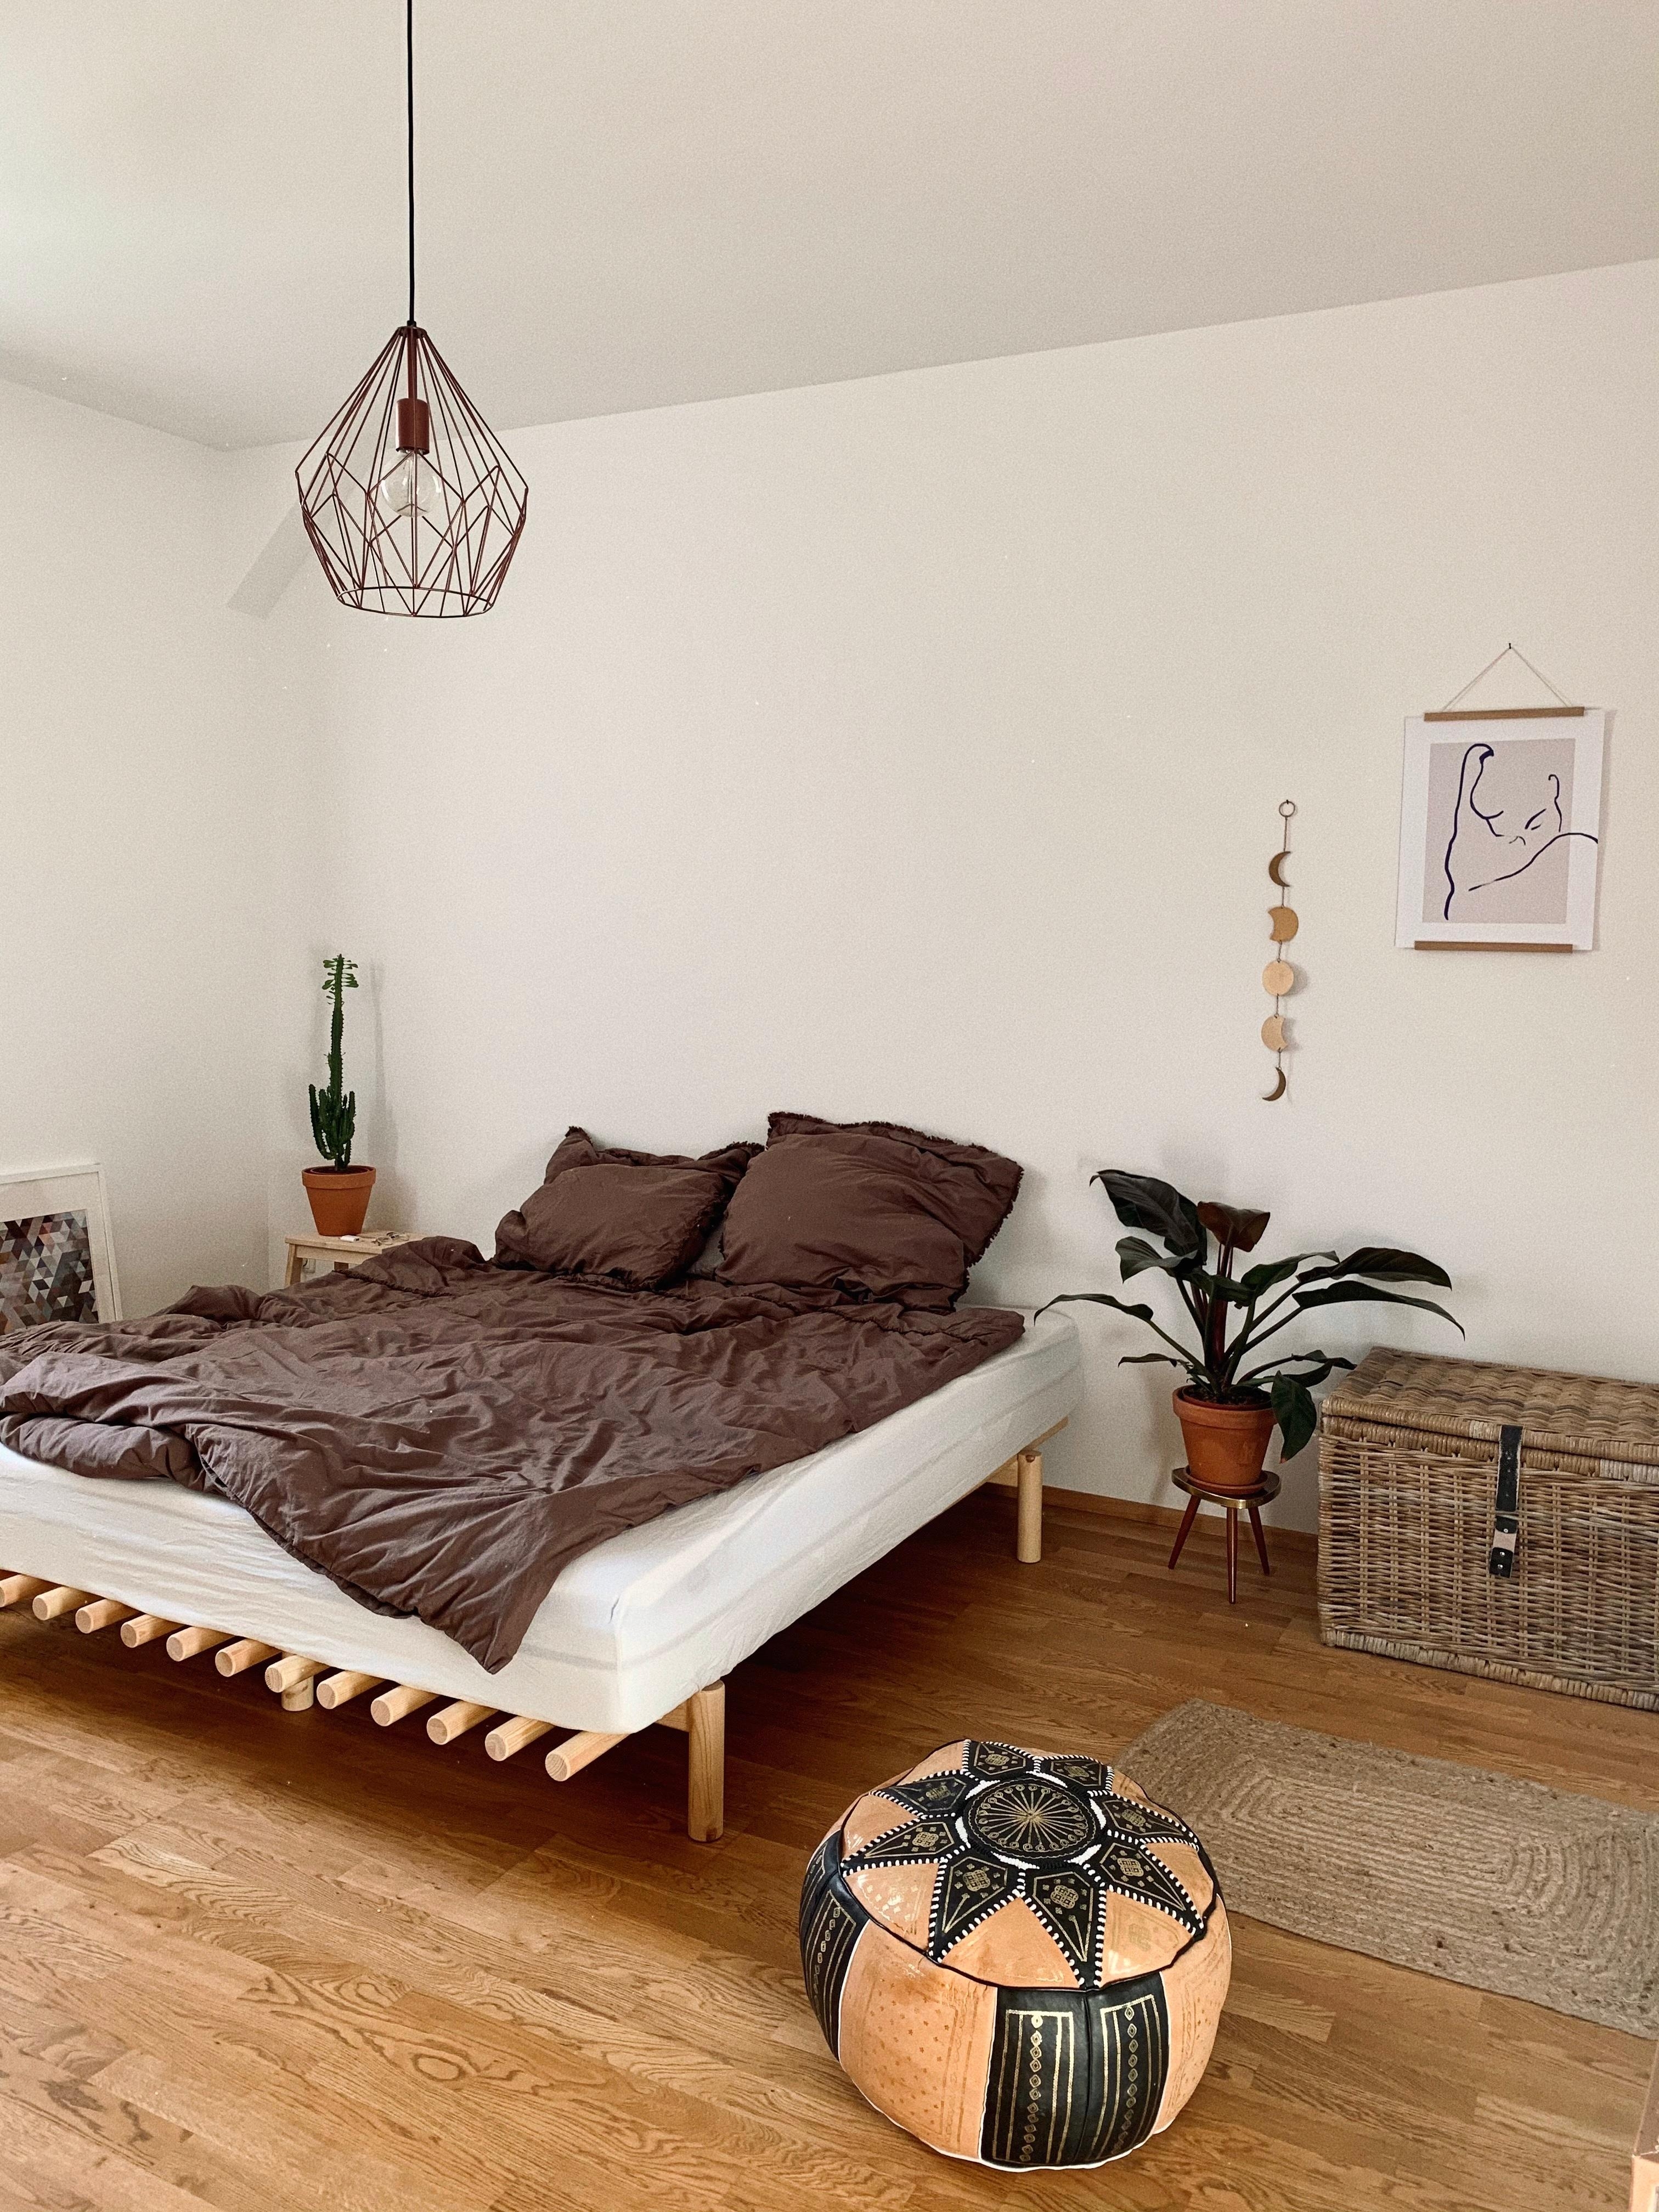 hello hello new bed! 🌝
#bedroom#newin#karupdesign#nachhaltig